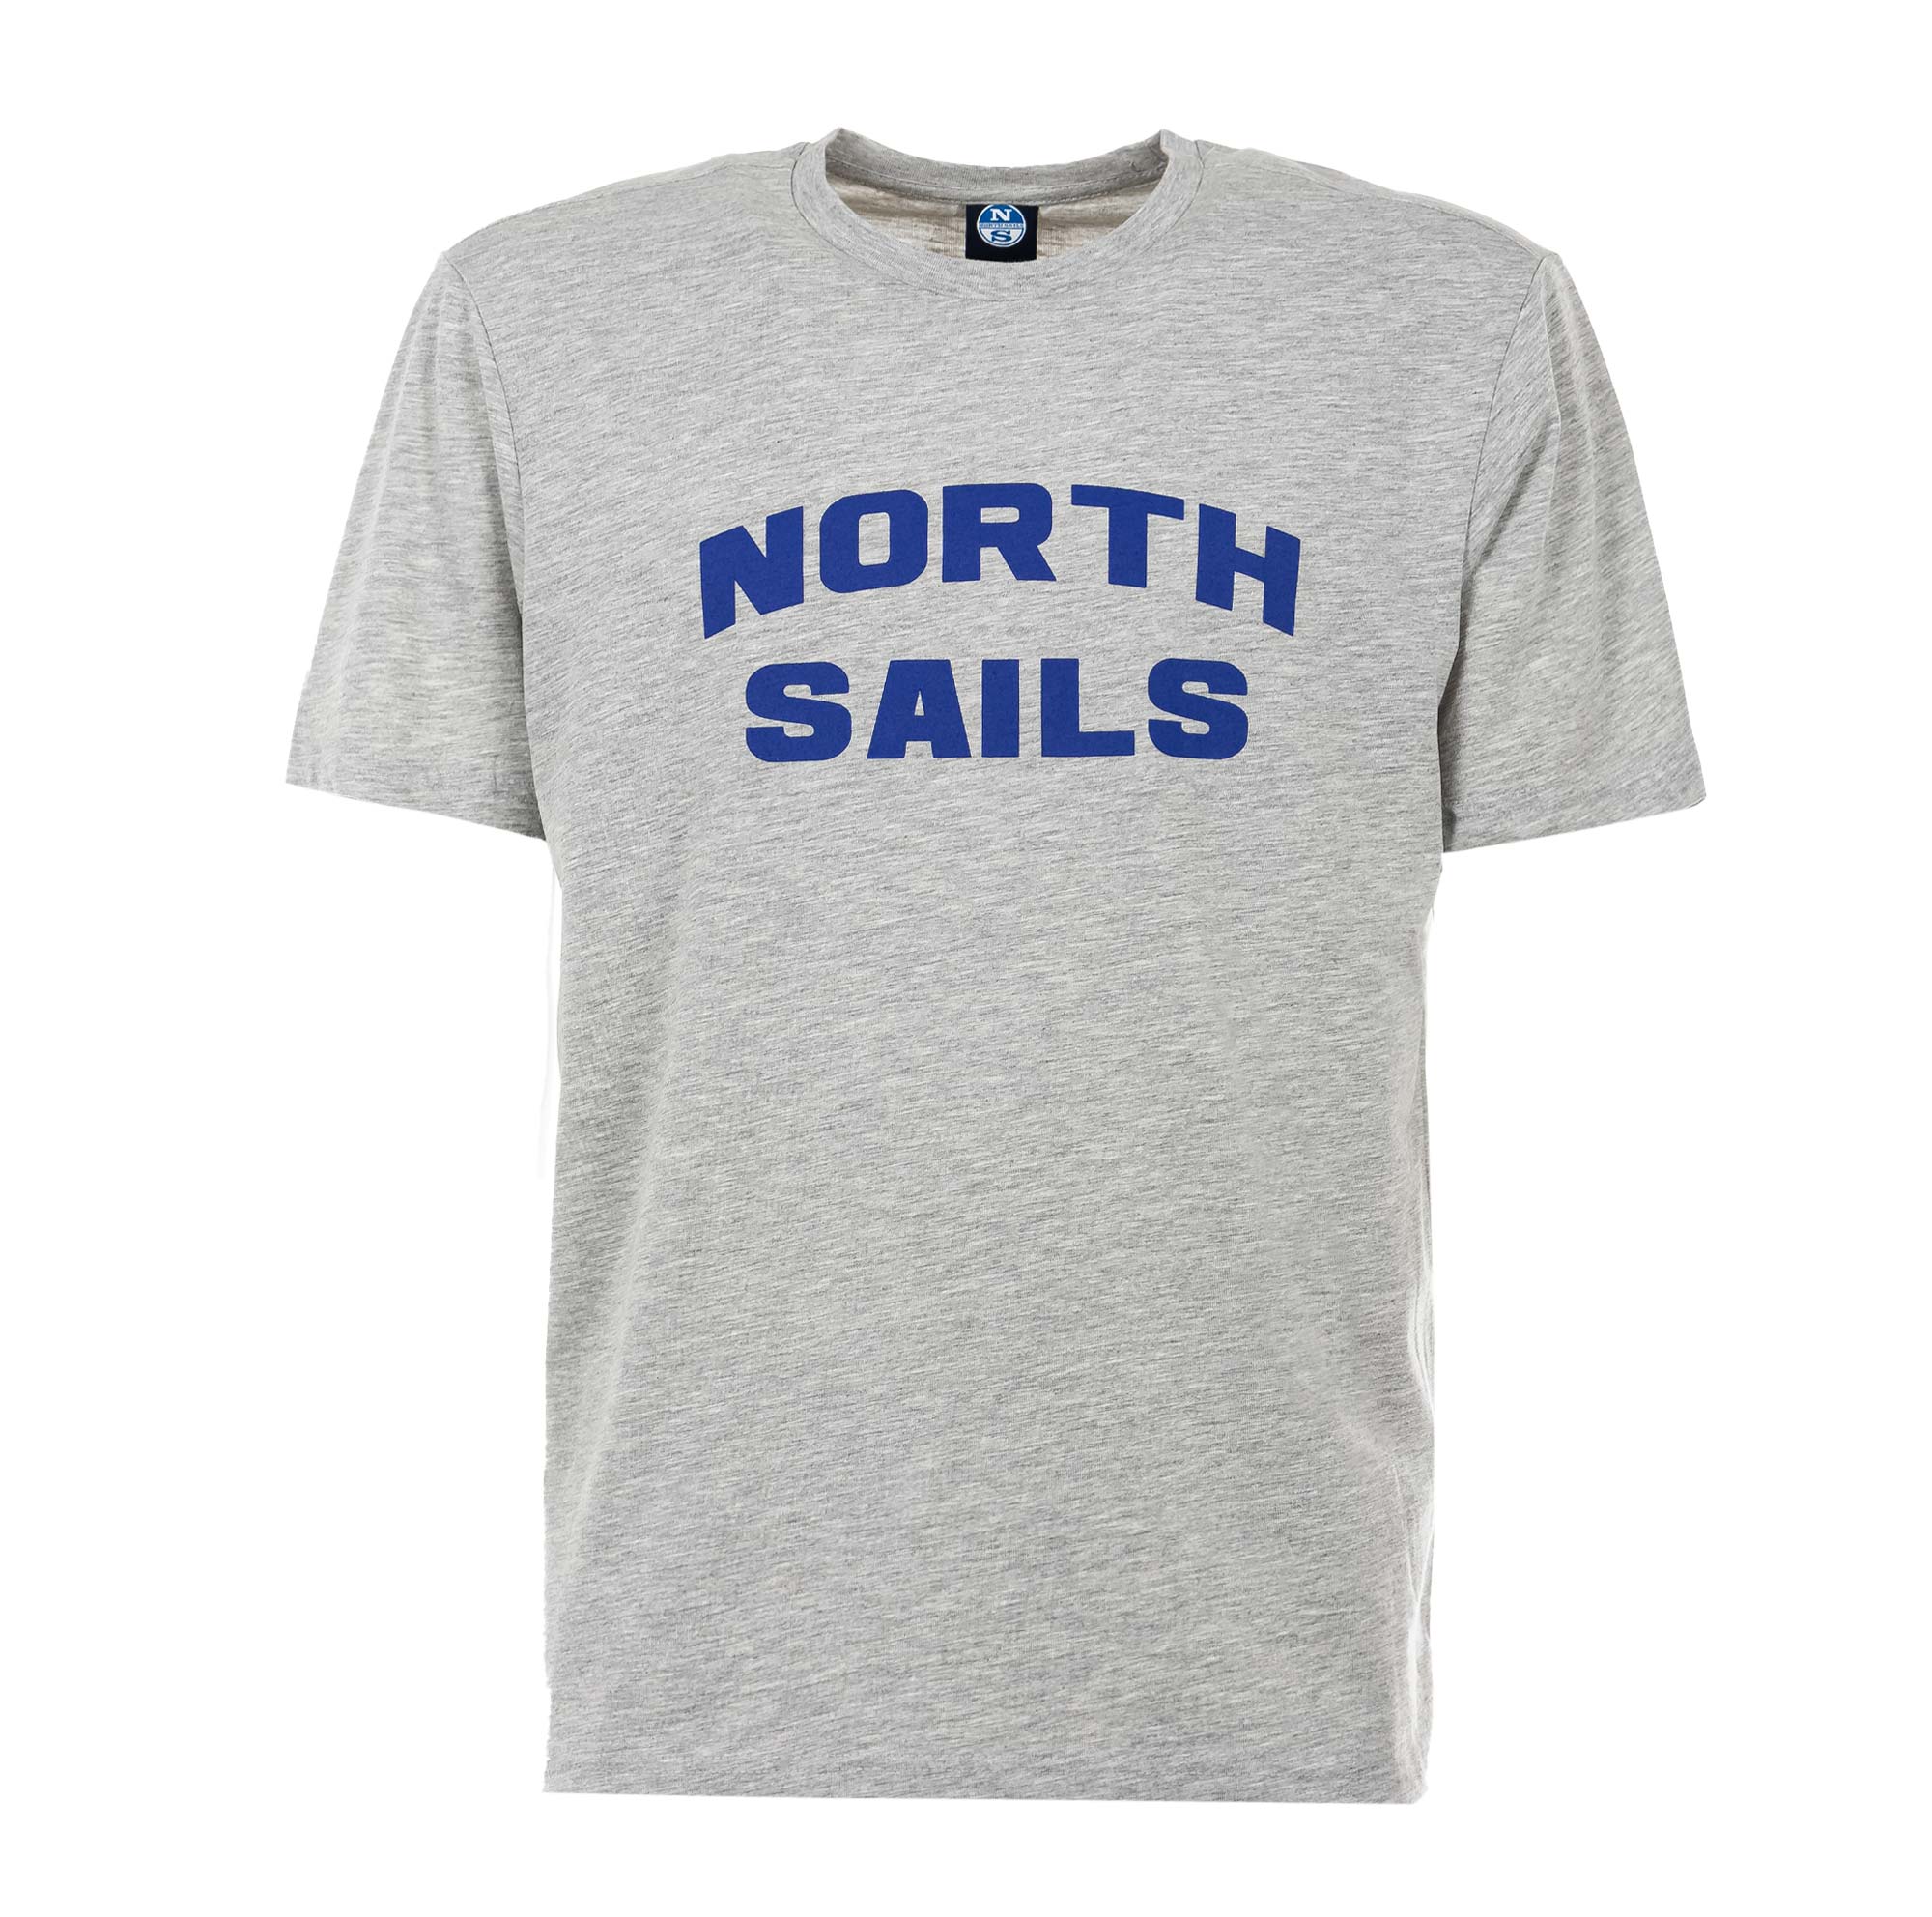 north sails | t-shirt da uomo